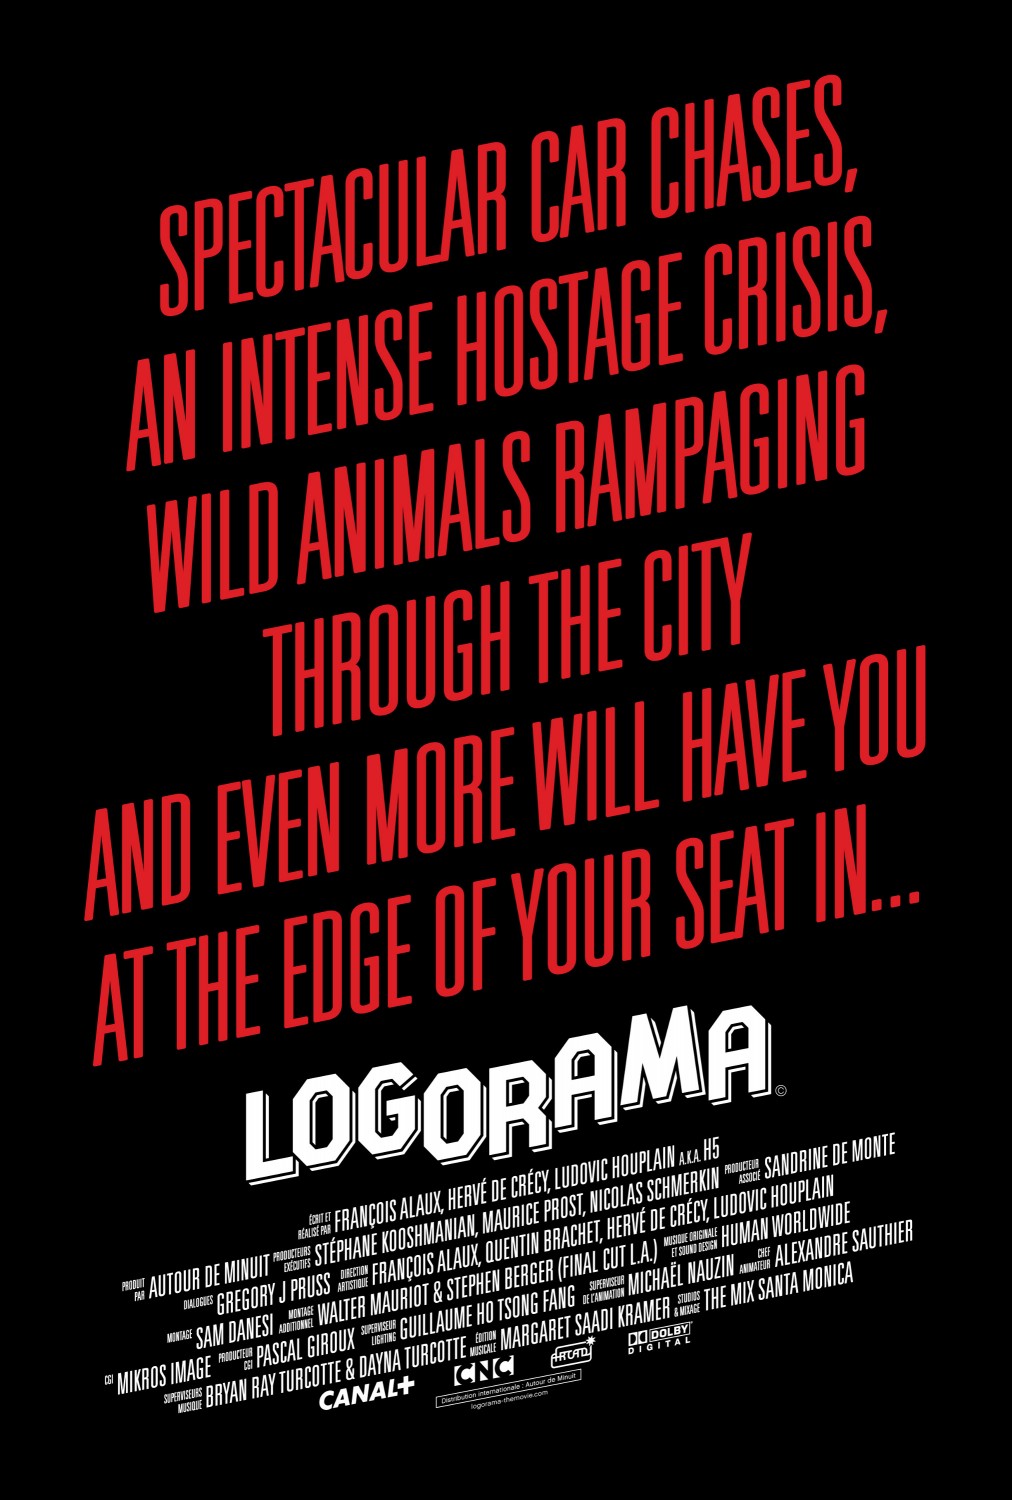 Extra Large Movie Poster Image for Logorama